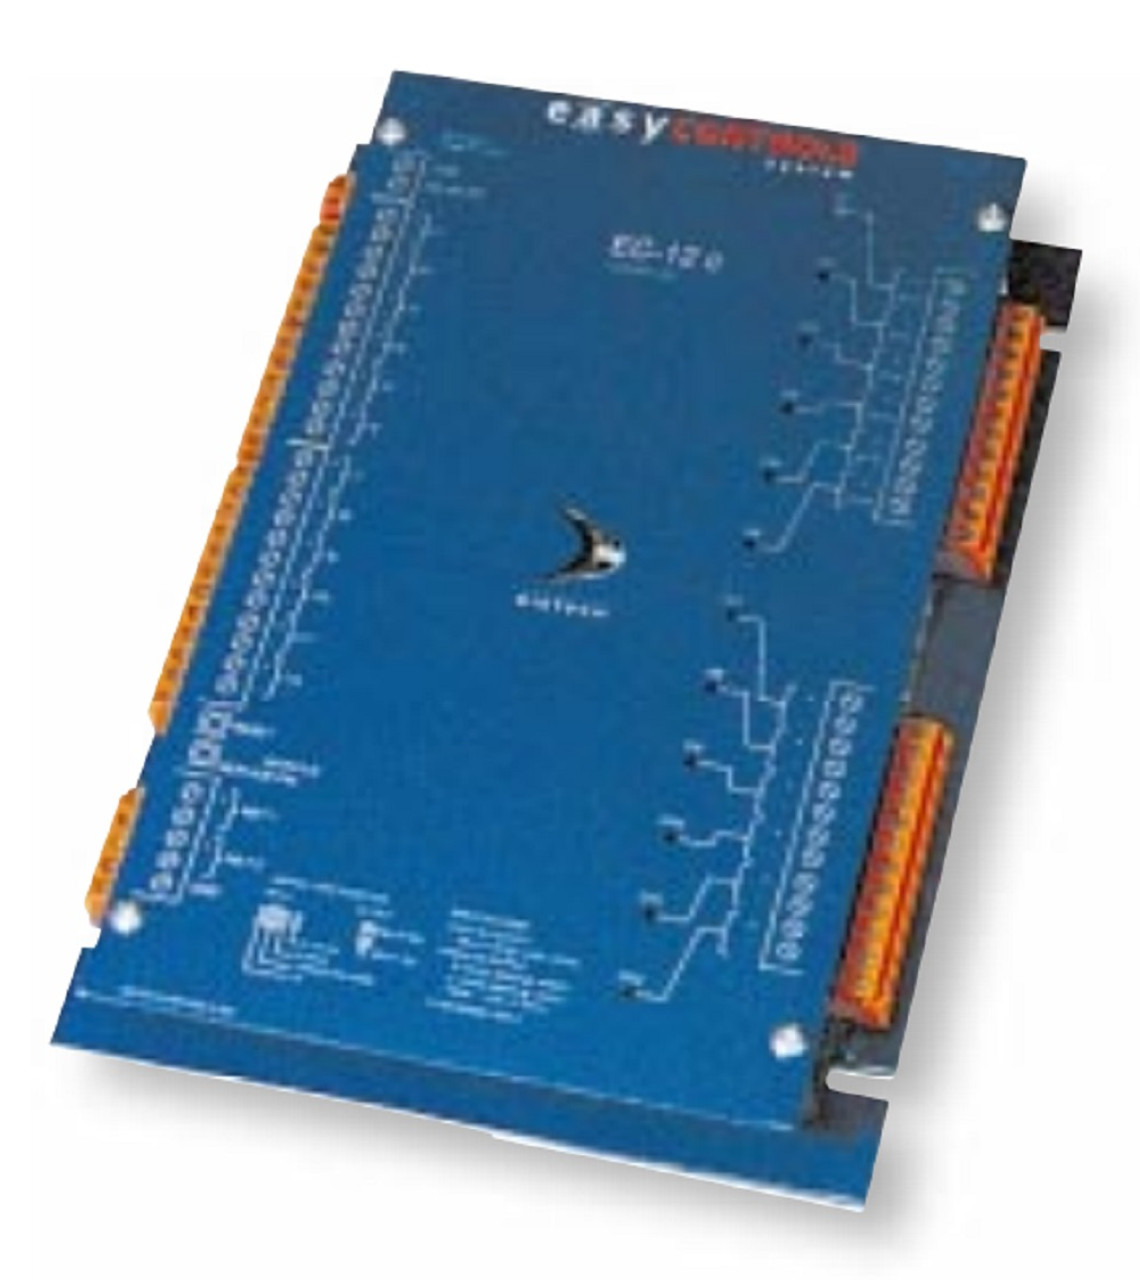 Distech CDIP-12CX-01 EC-12C EasyControls 24-Point Free Programmable Controller [New]